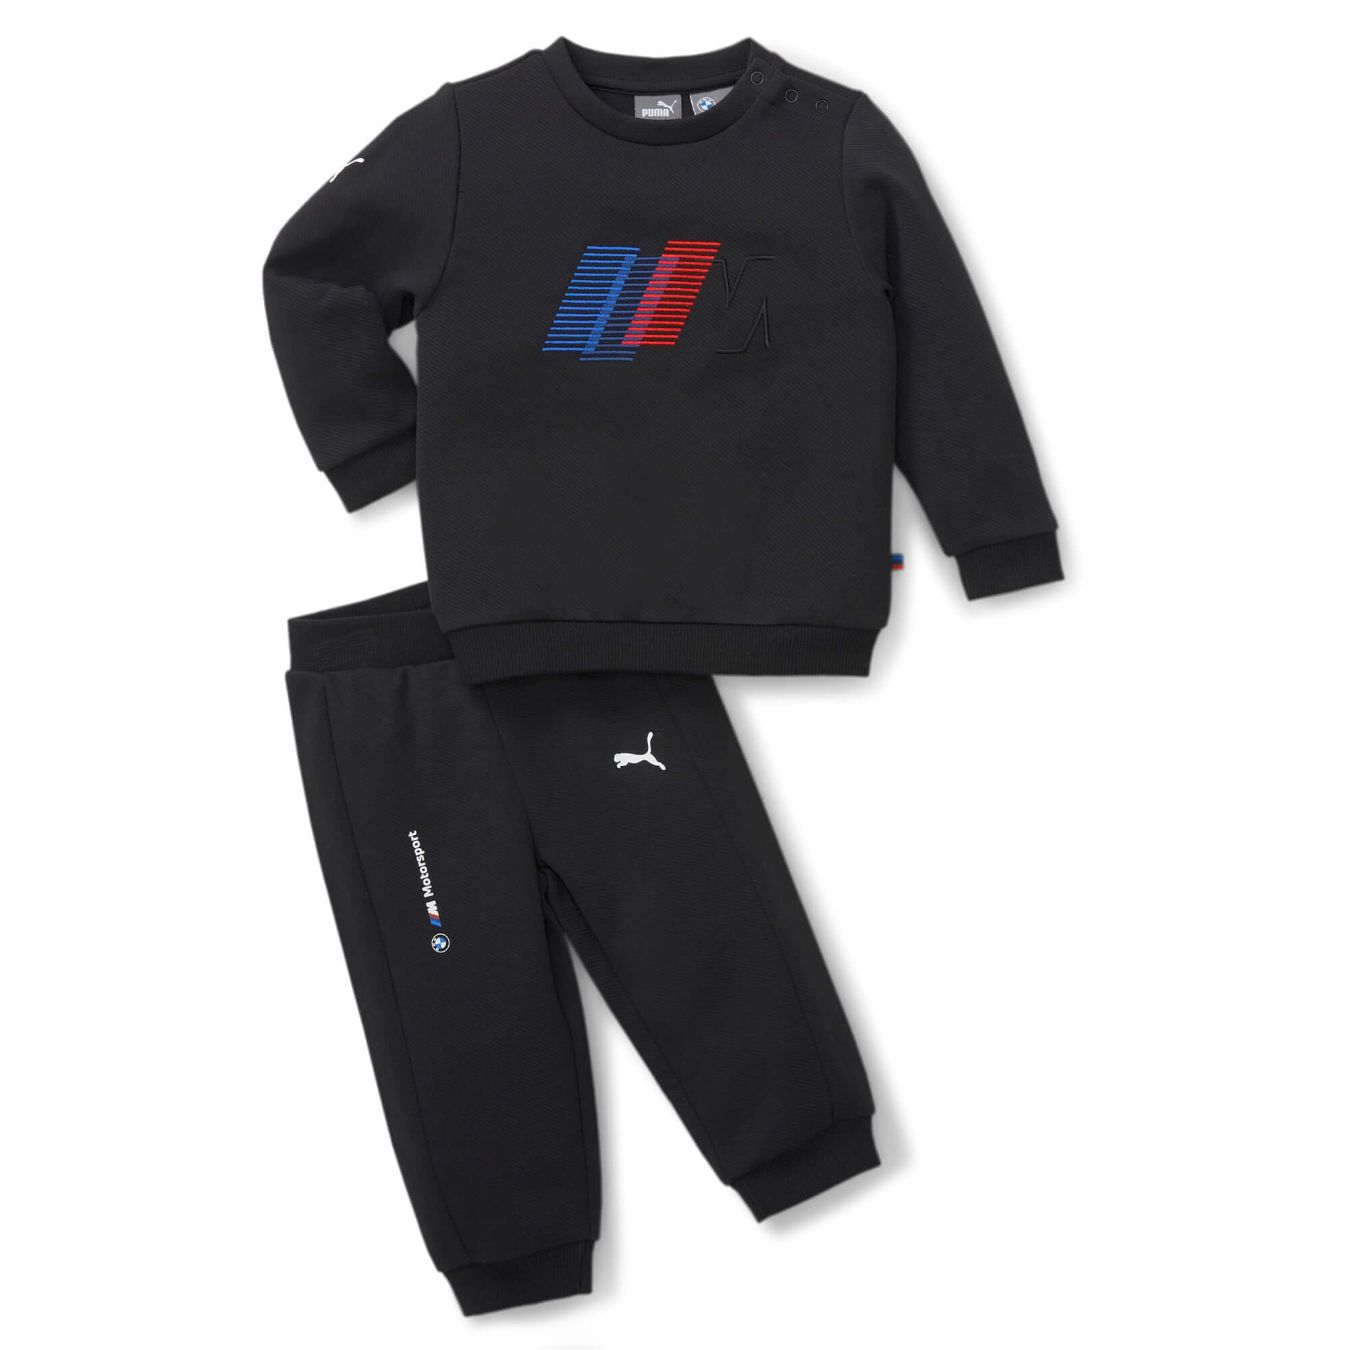 Logo FIA BMW MOTORSPORT MMS Sweater and Pants set for child - Black